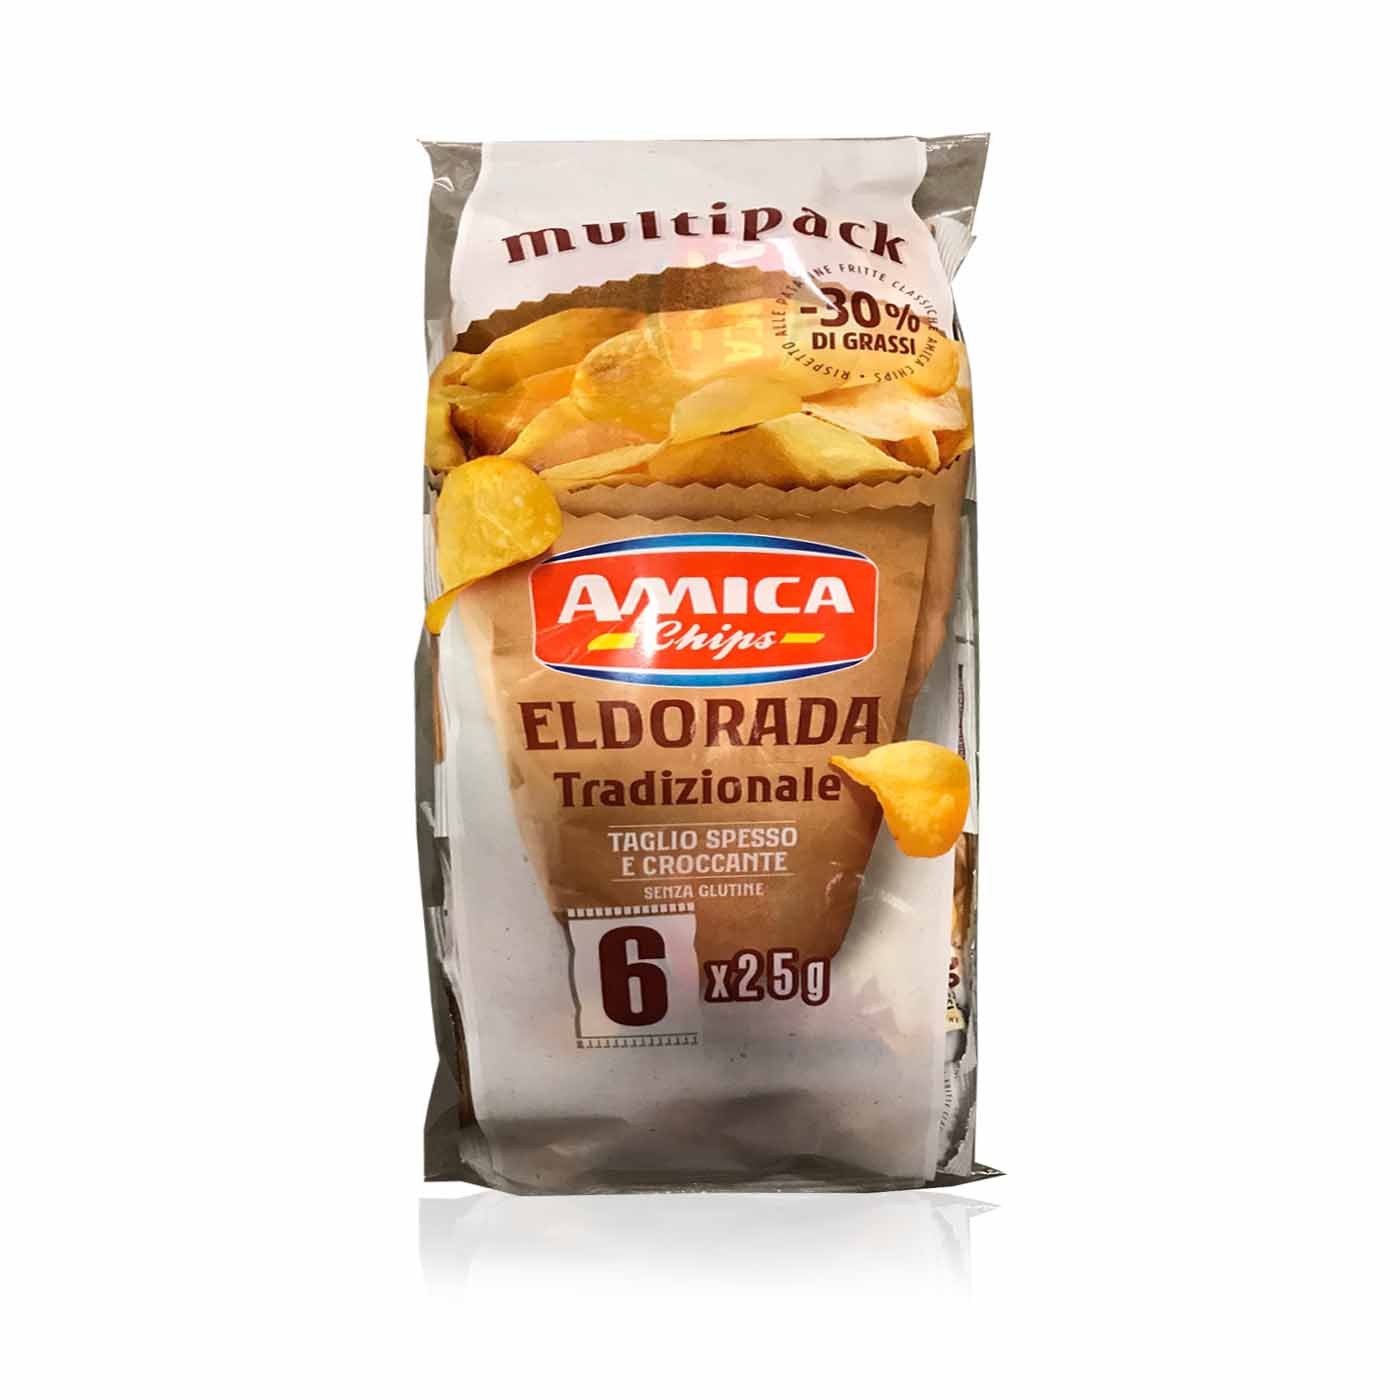 AMICA Chips - Eldorada Tradizionale - 6x25g